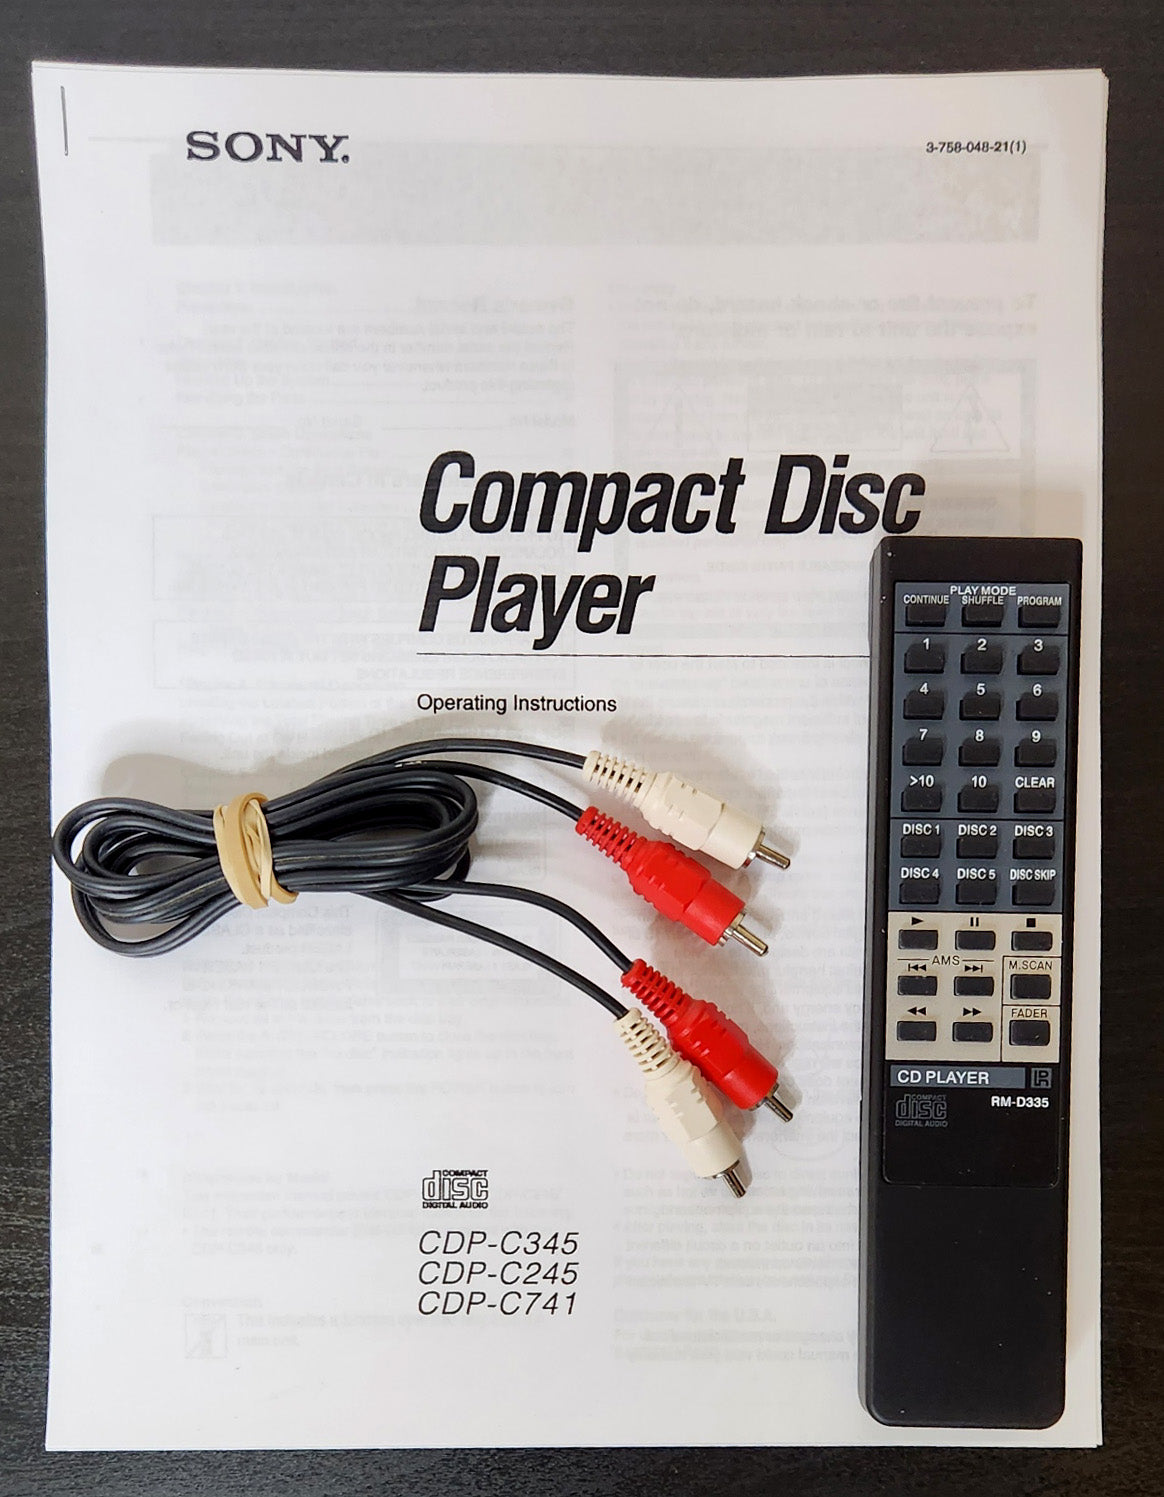 Sony CDP-C741 5-Disc Carousel CD Changer